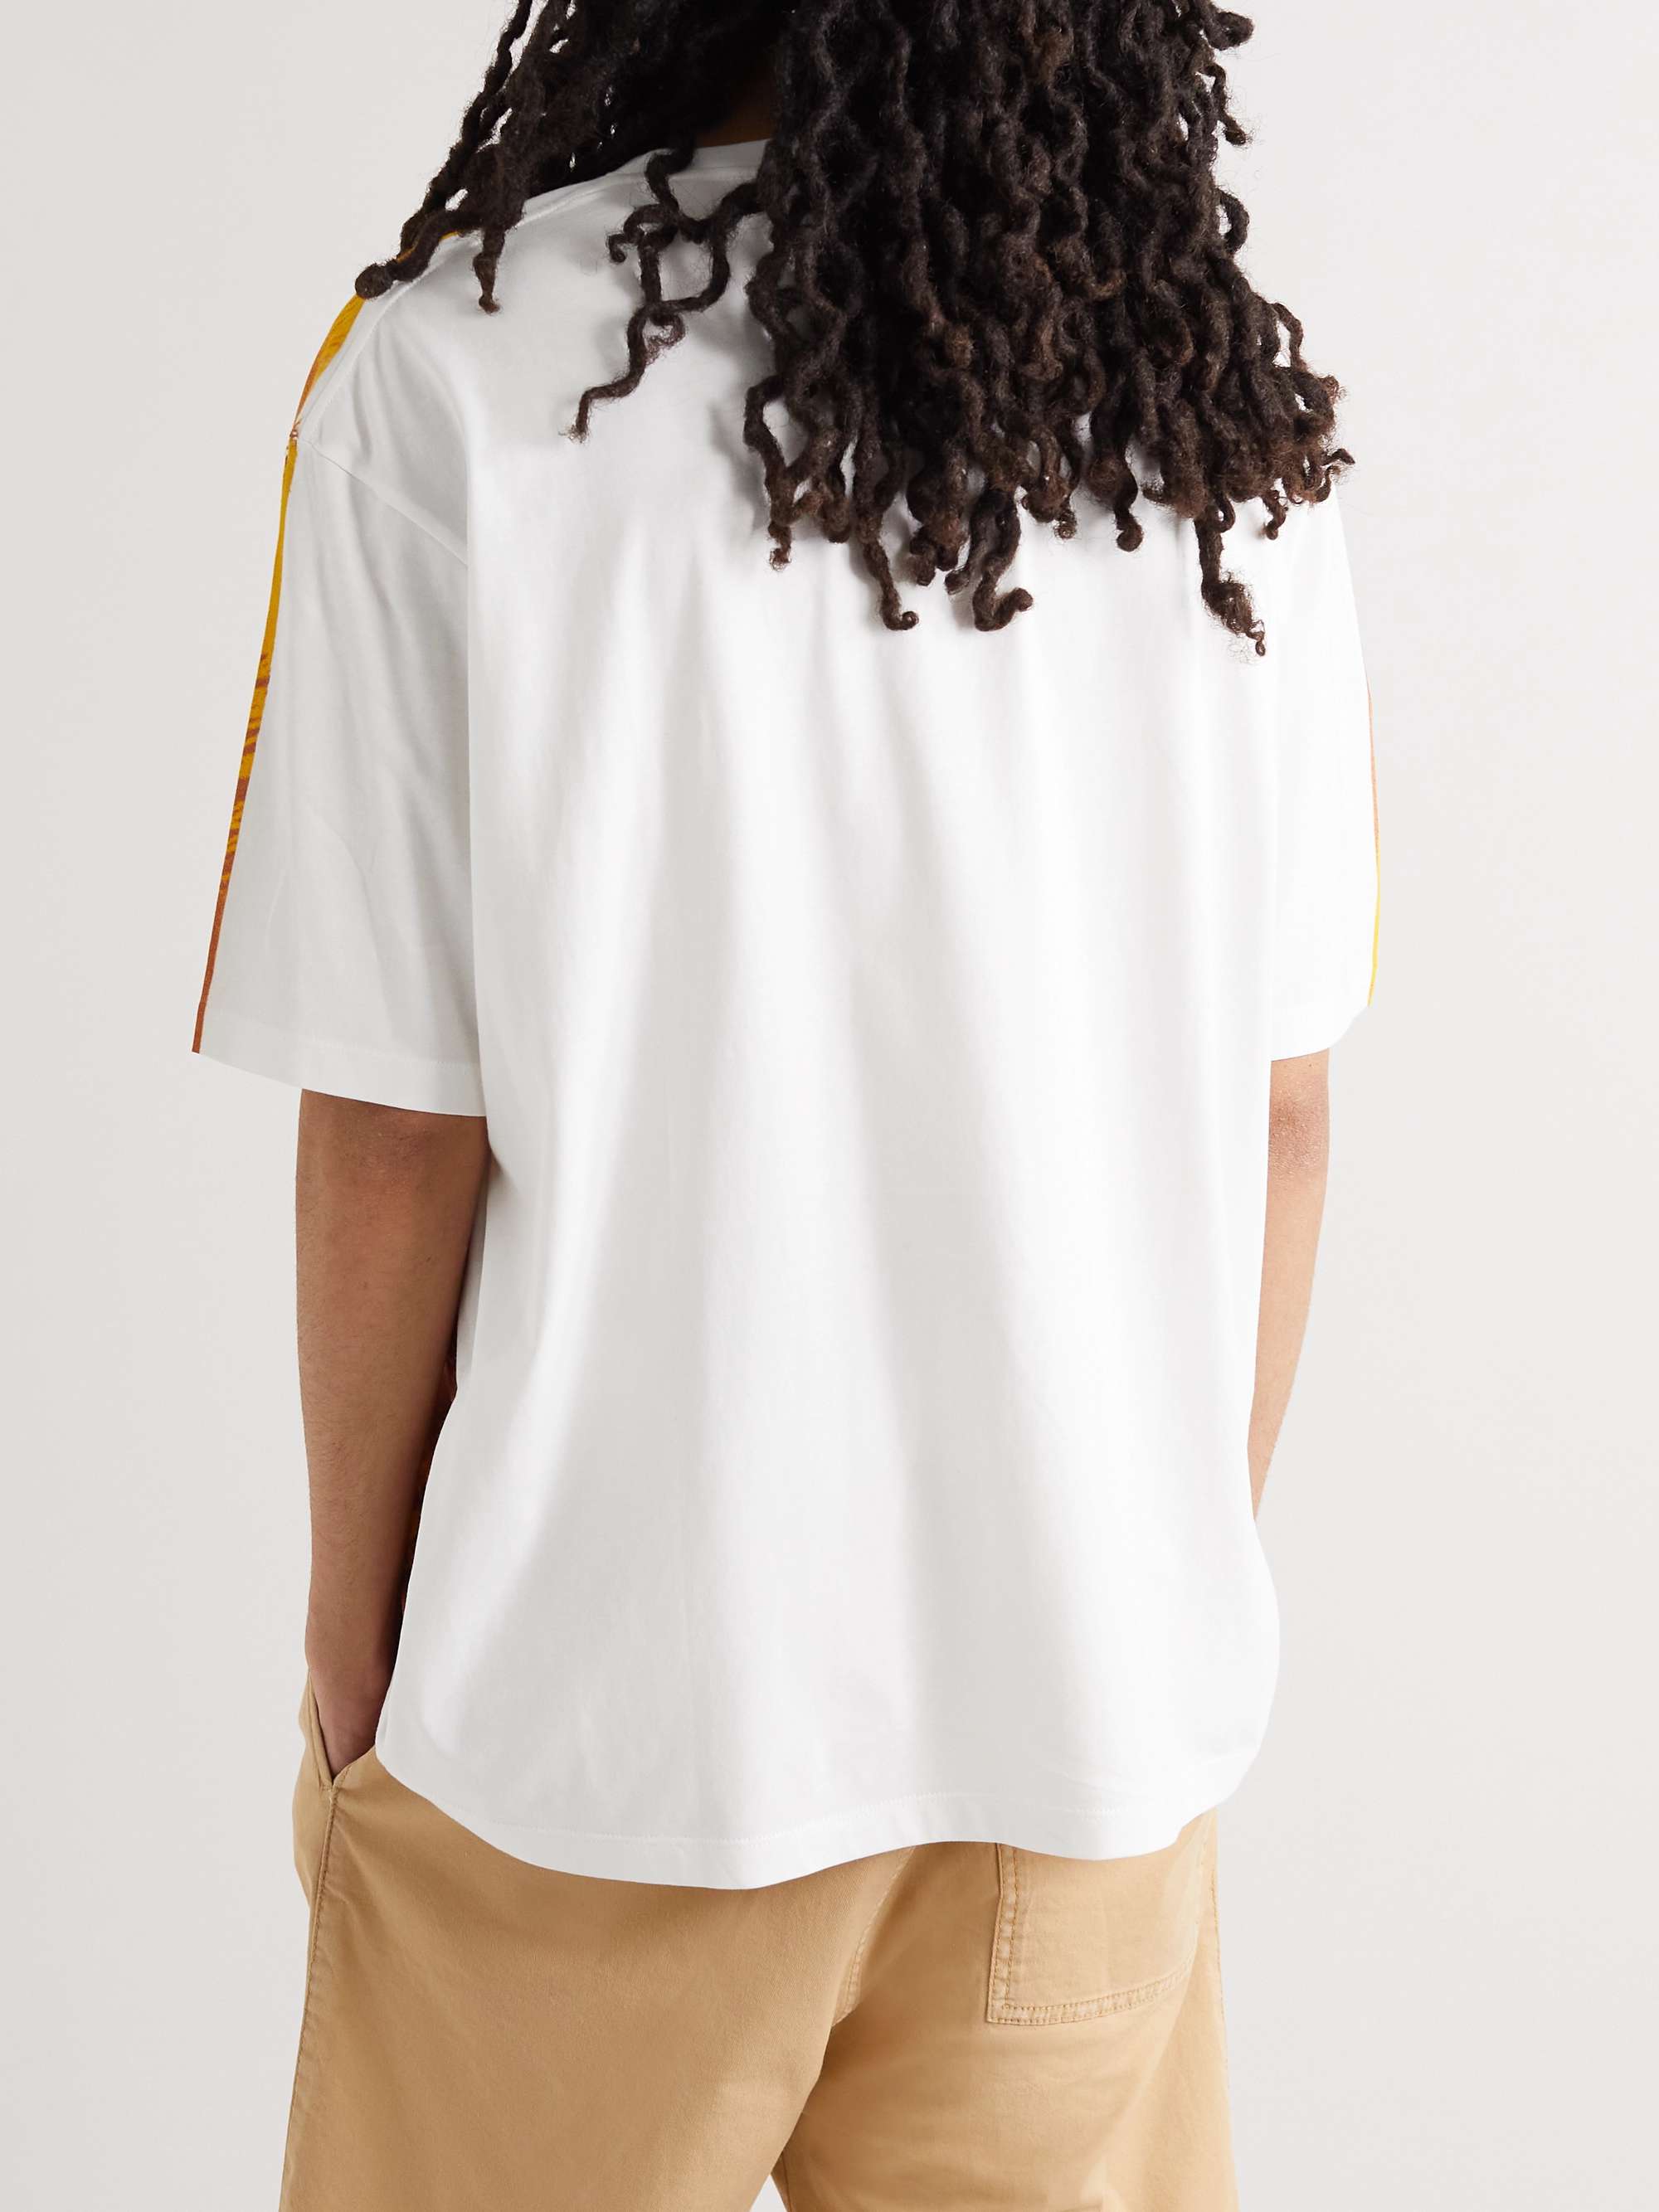 LOEWE + Paula's Ibiza Printed Cotton-Jersey T-Shirt